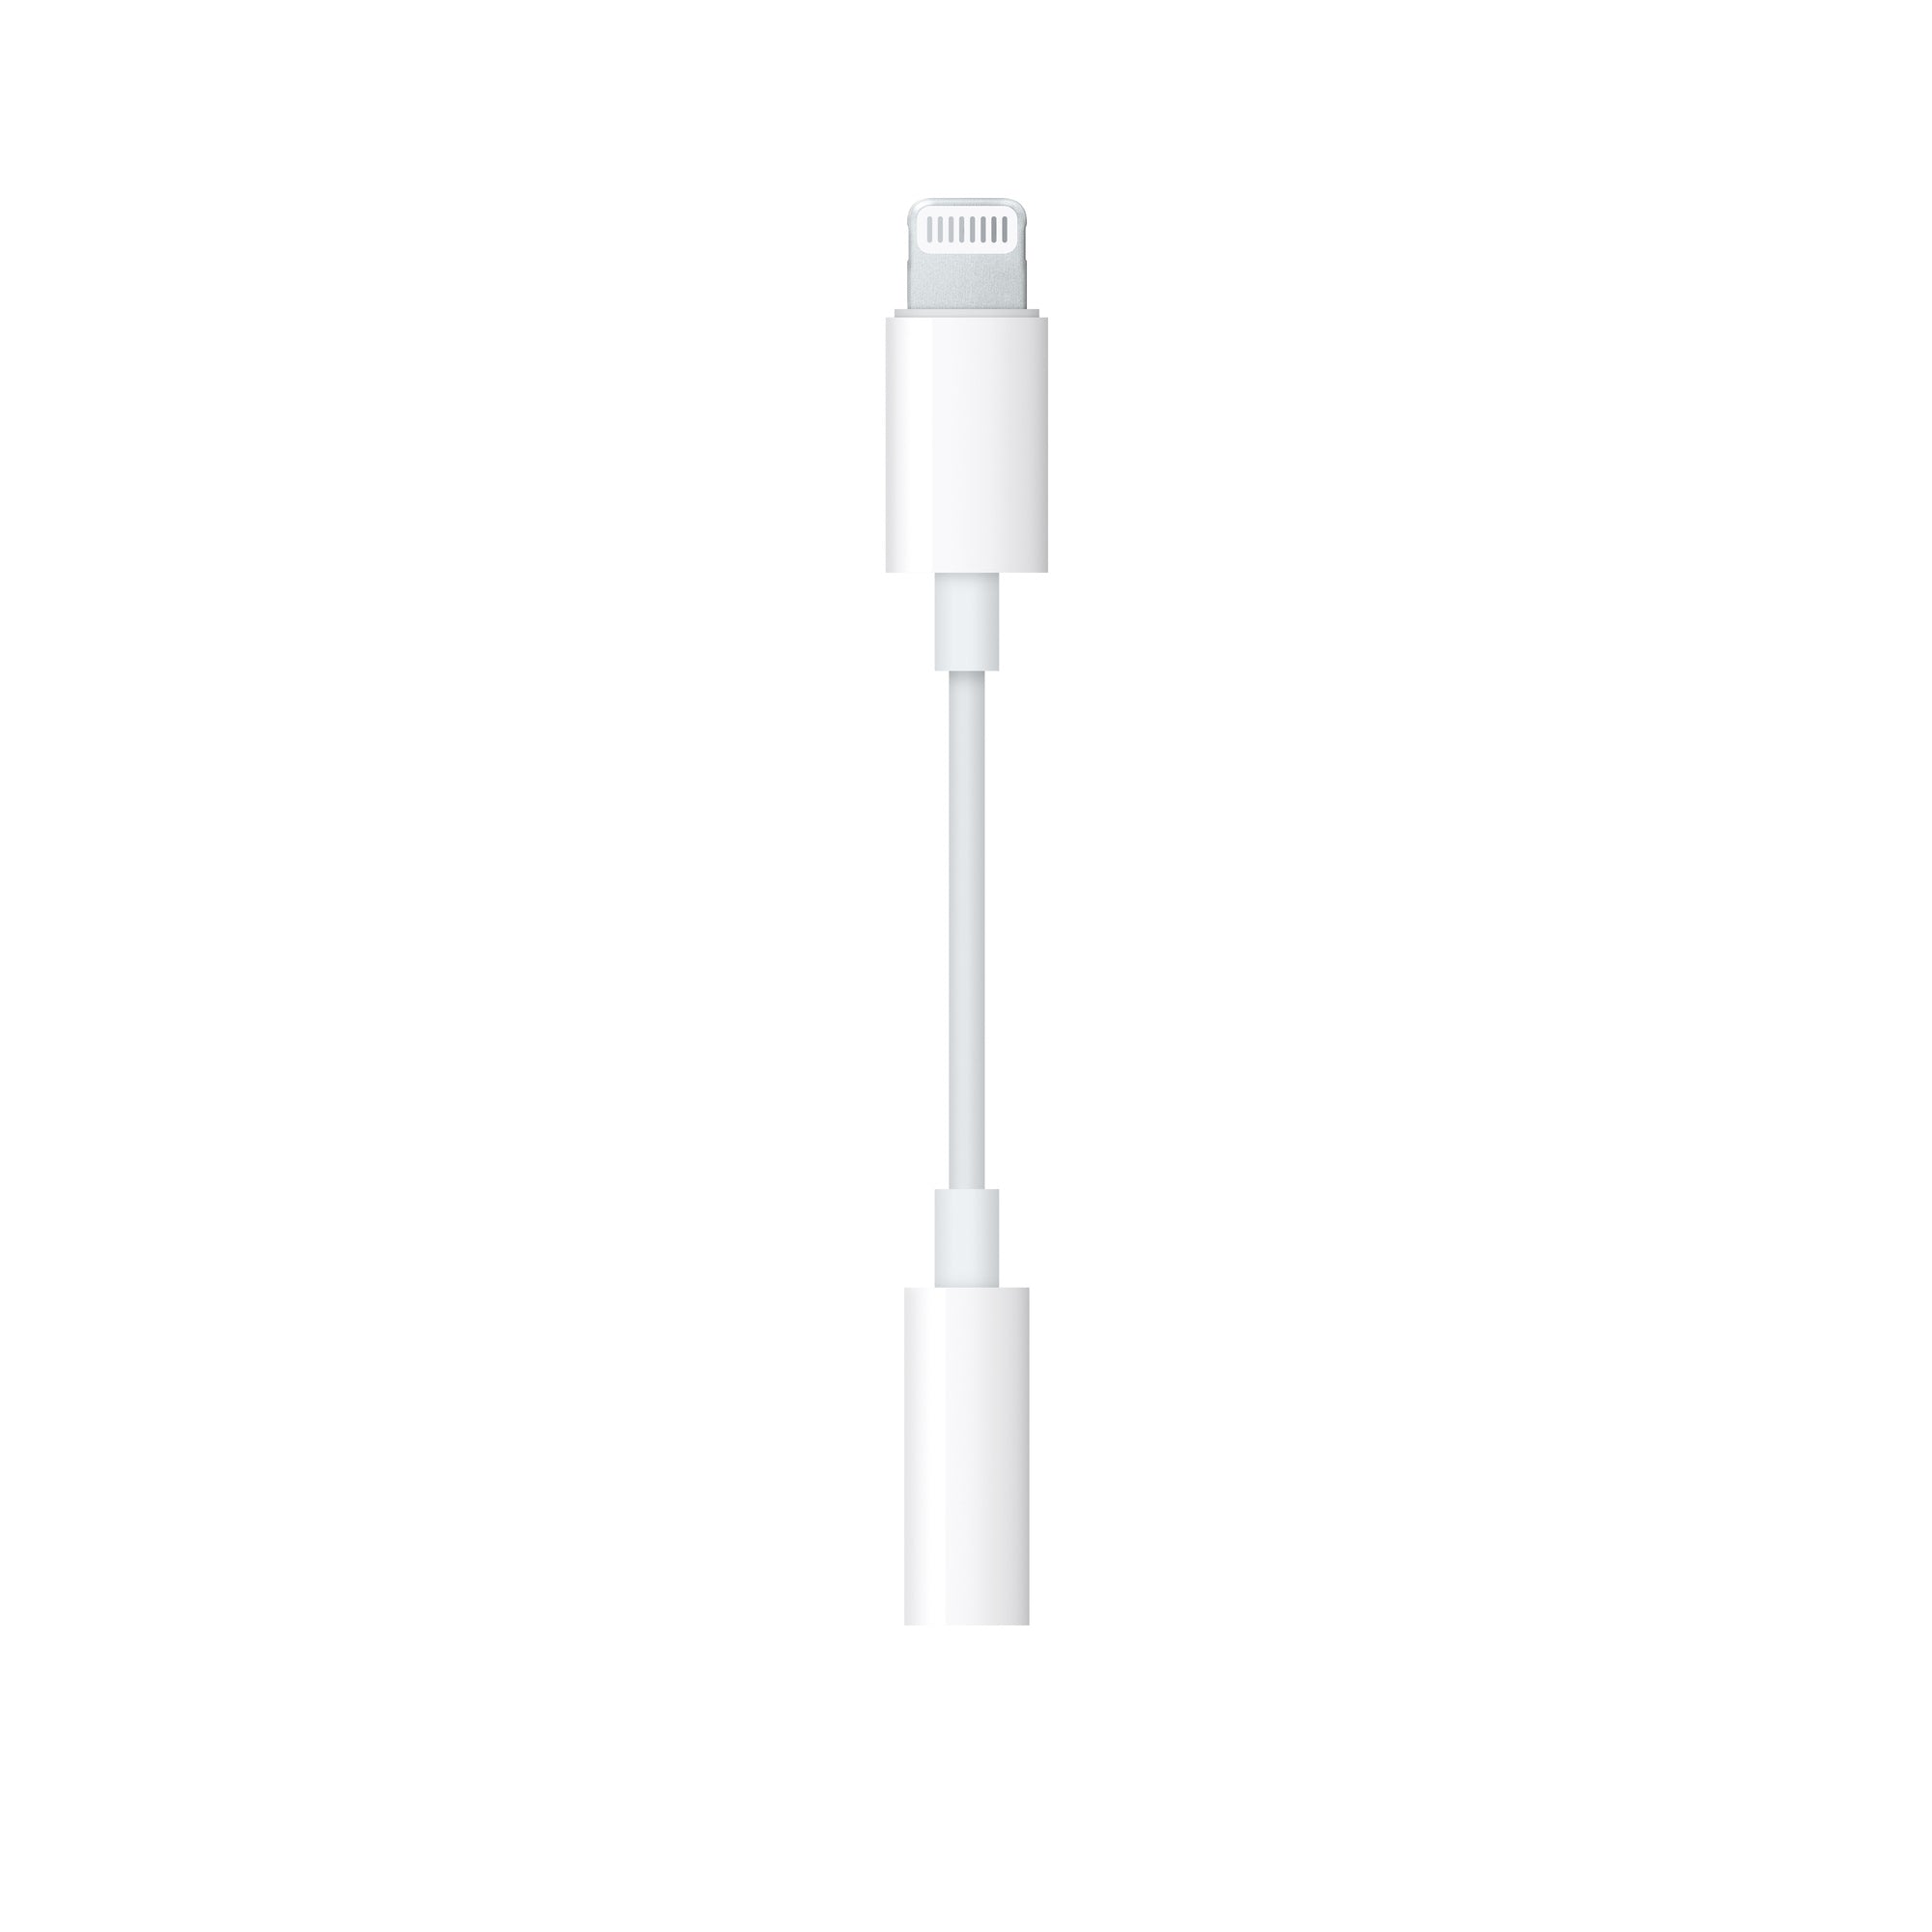 Apple iPad Pro 9.7-inch Heaphone Jack Connector (Lightning to 3.5mm)